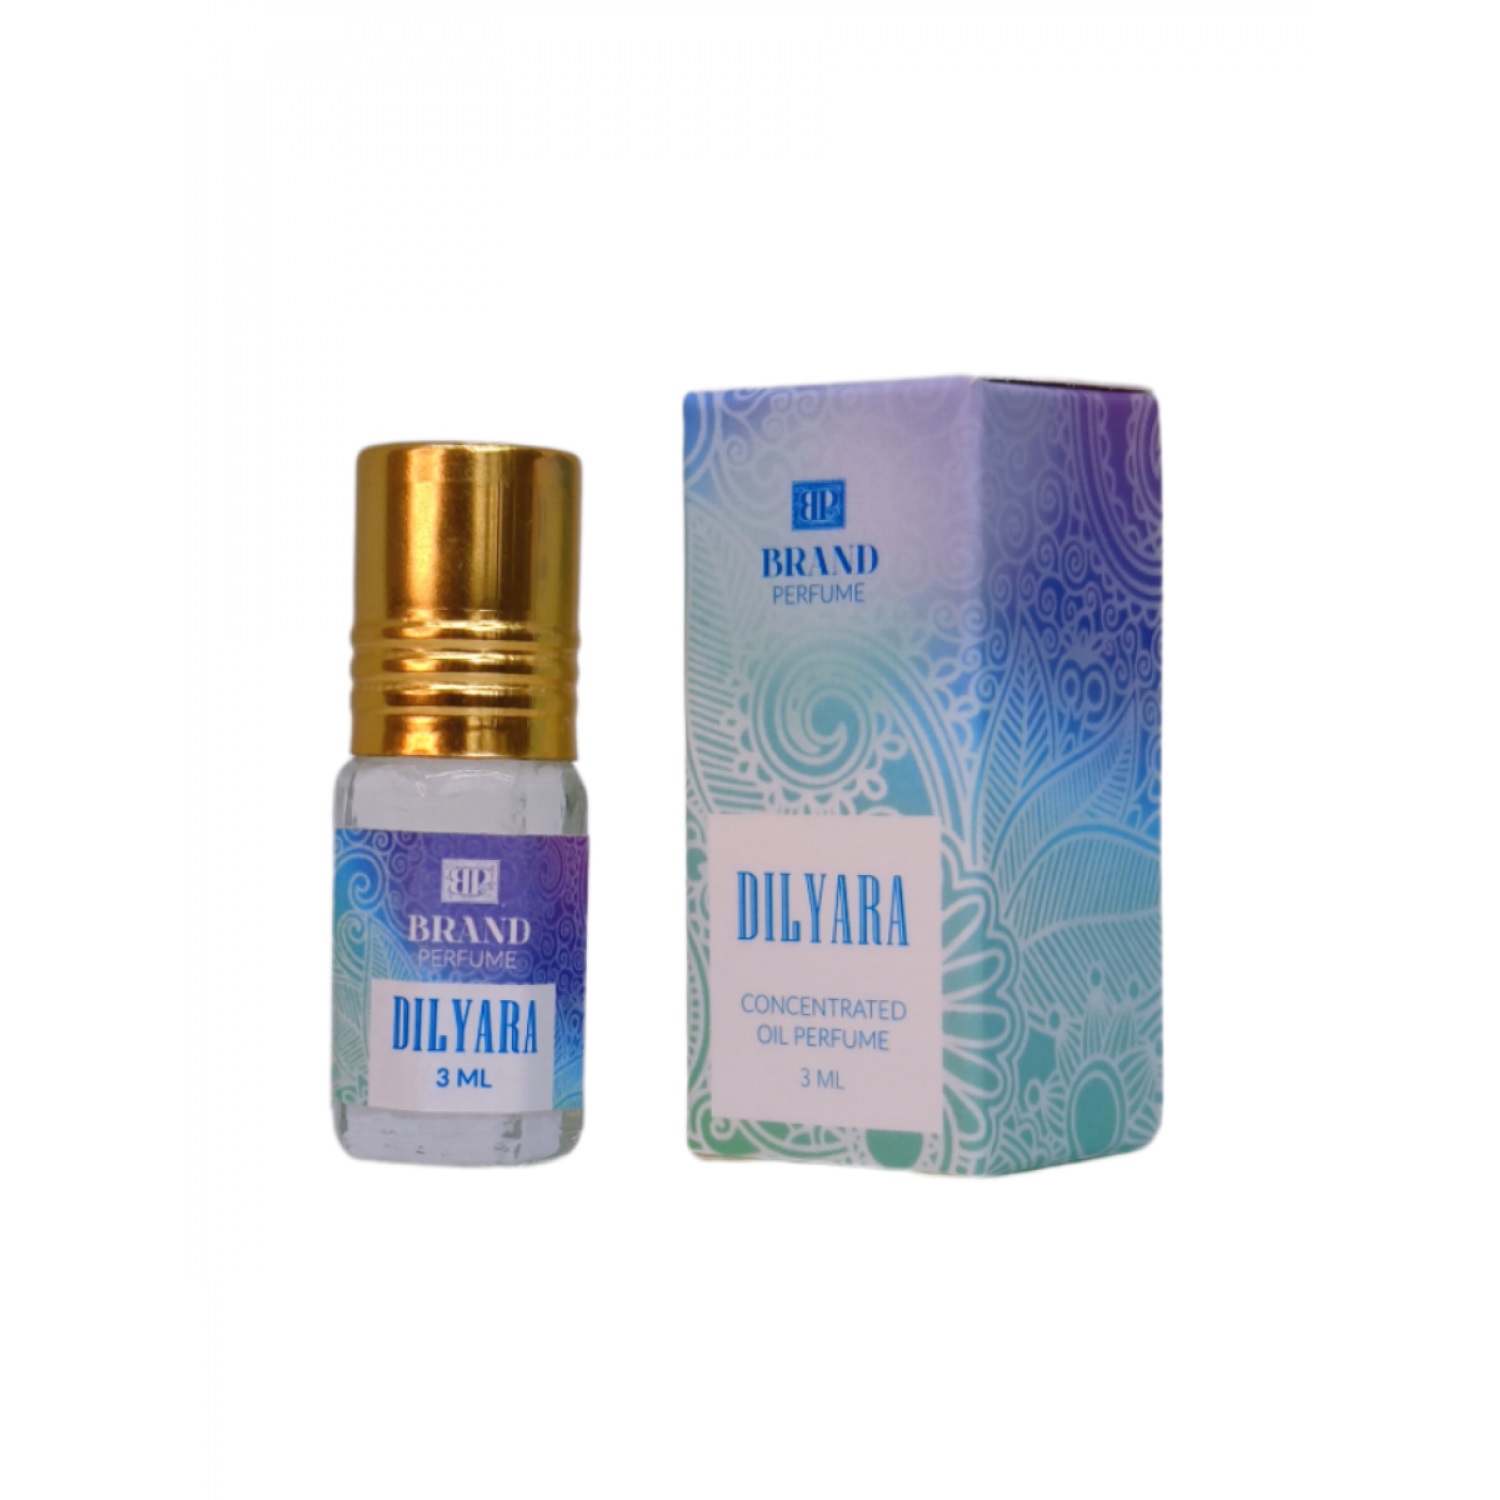 DILYARA Concentrated Oil Perfume, Brand Perfume (Концентрированные масляные духи), ролик, 3 мл.